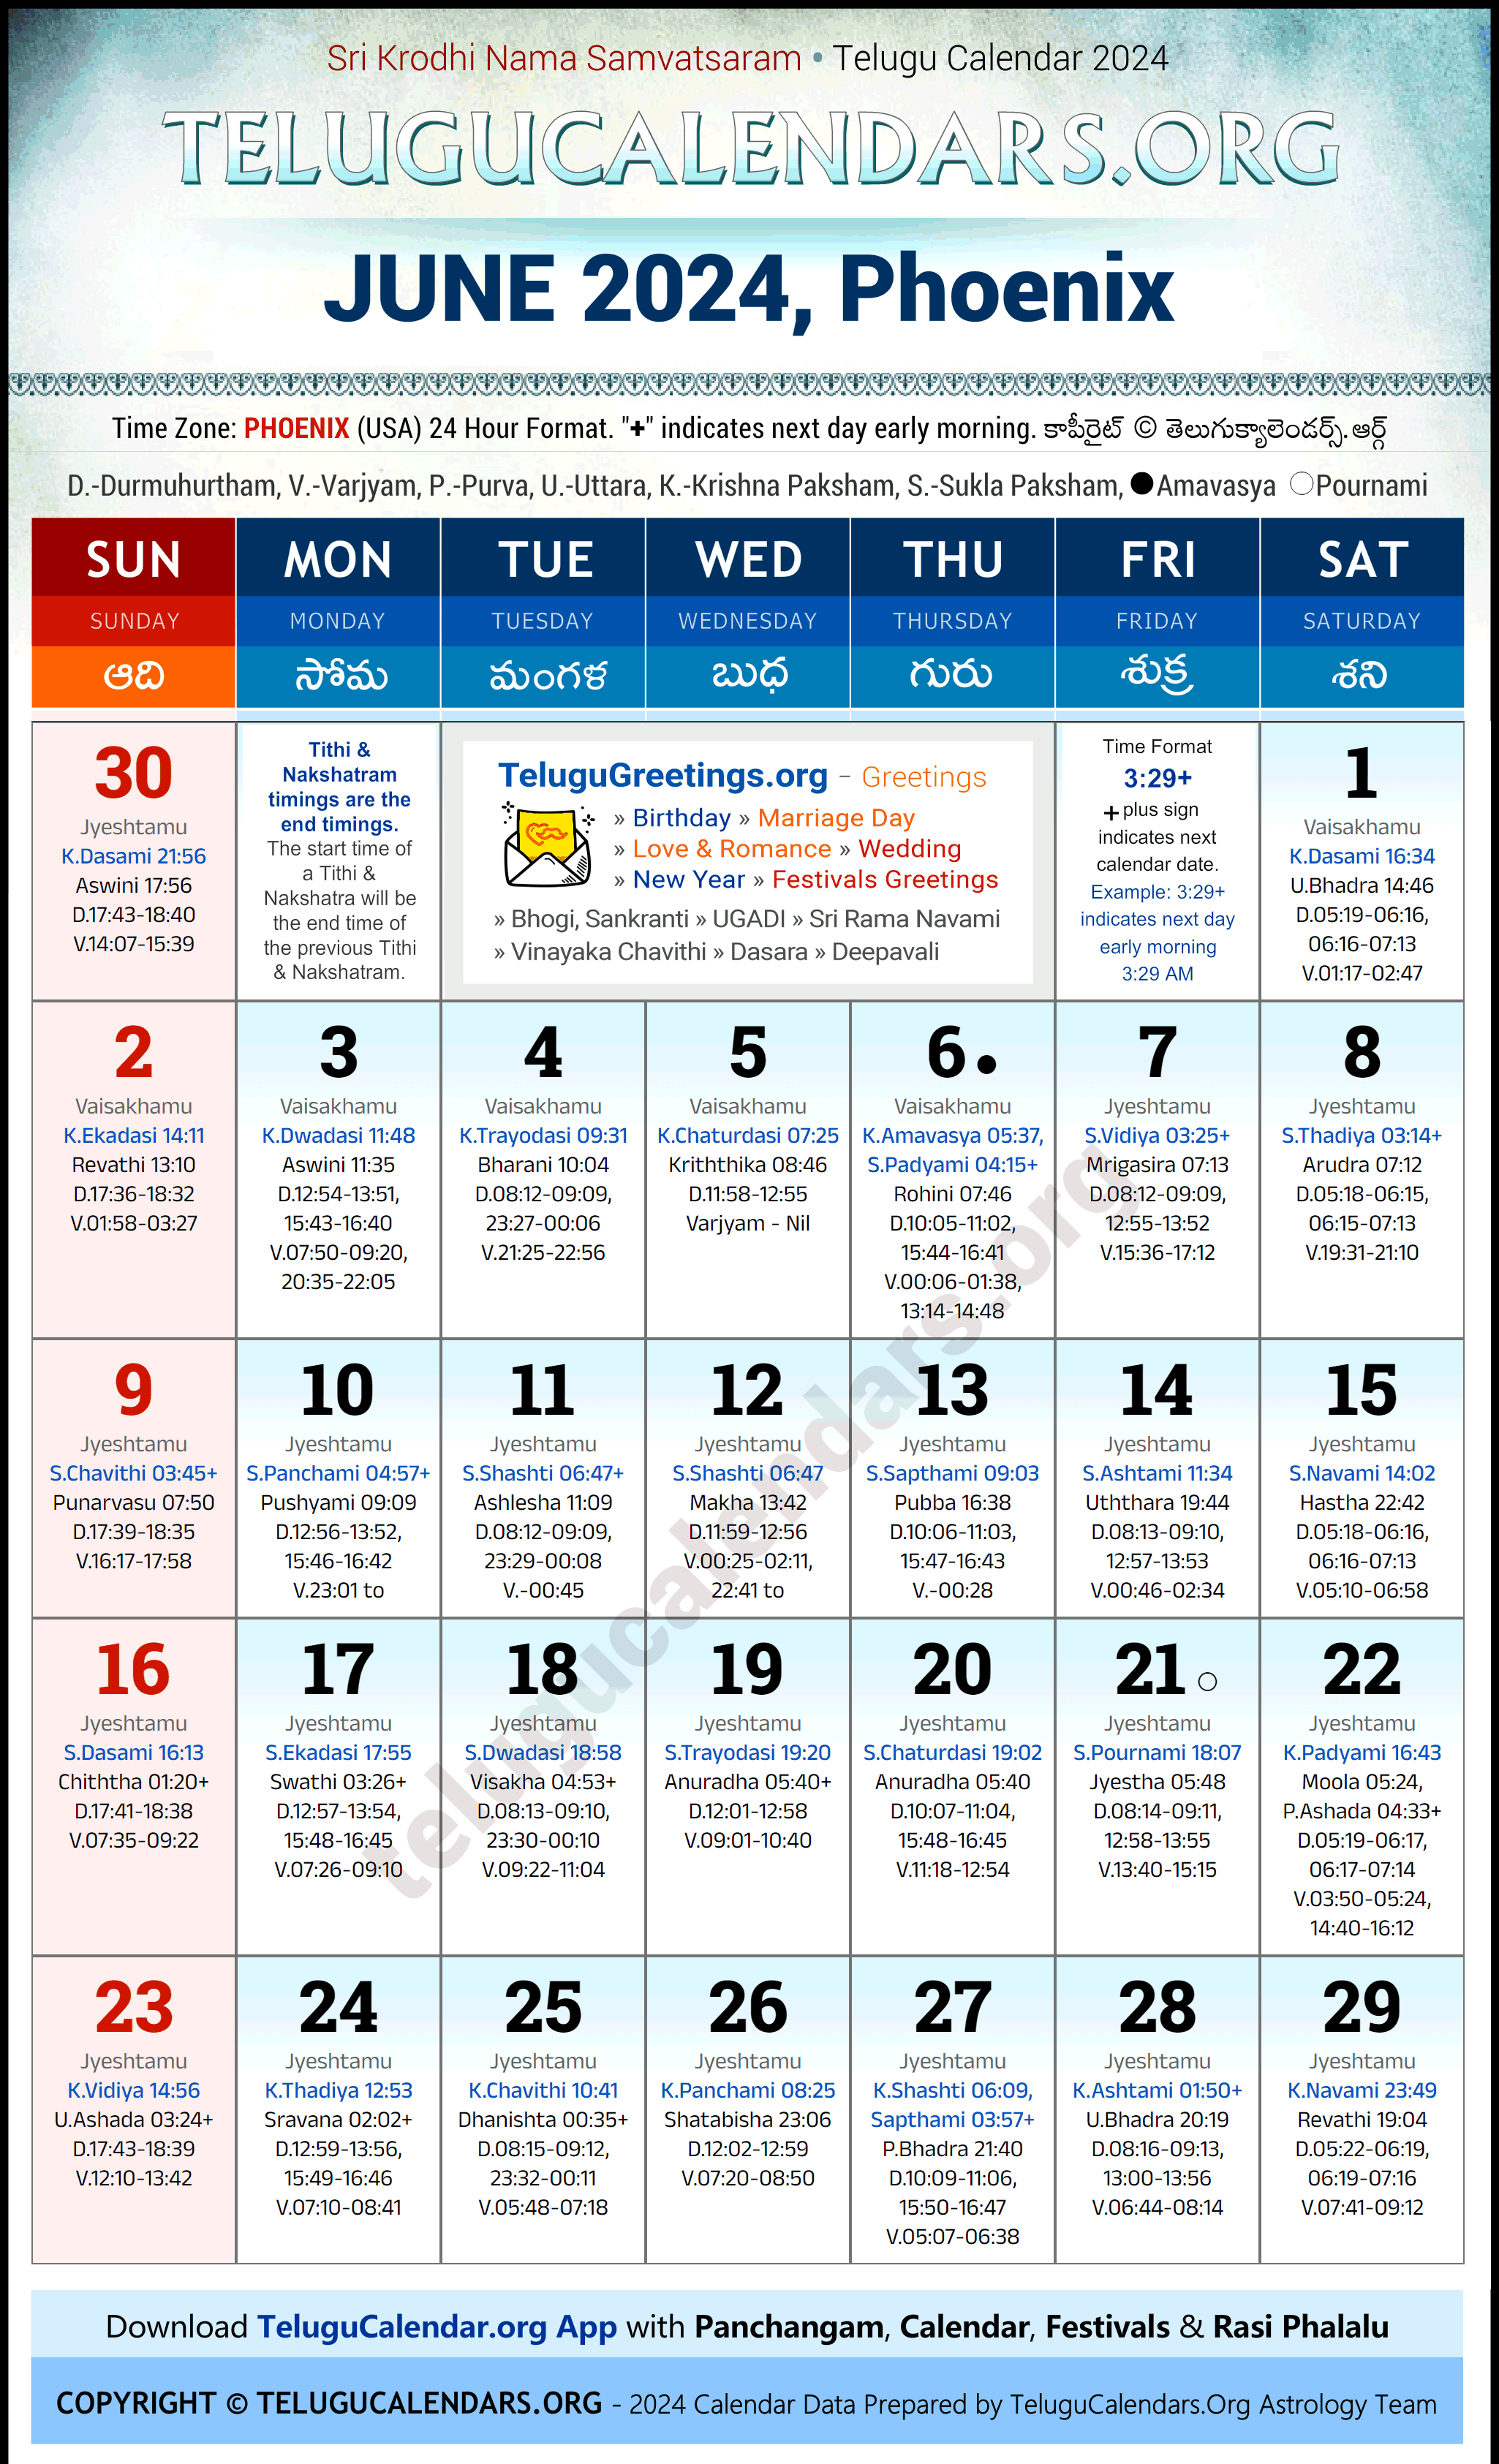 Telugu Calendar 2024 June Festivals for Phoenix